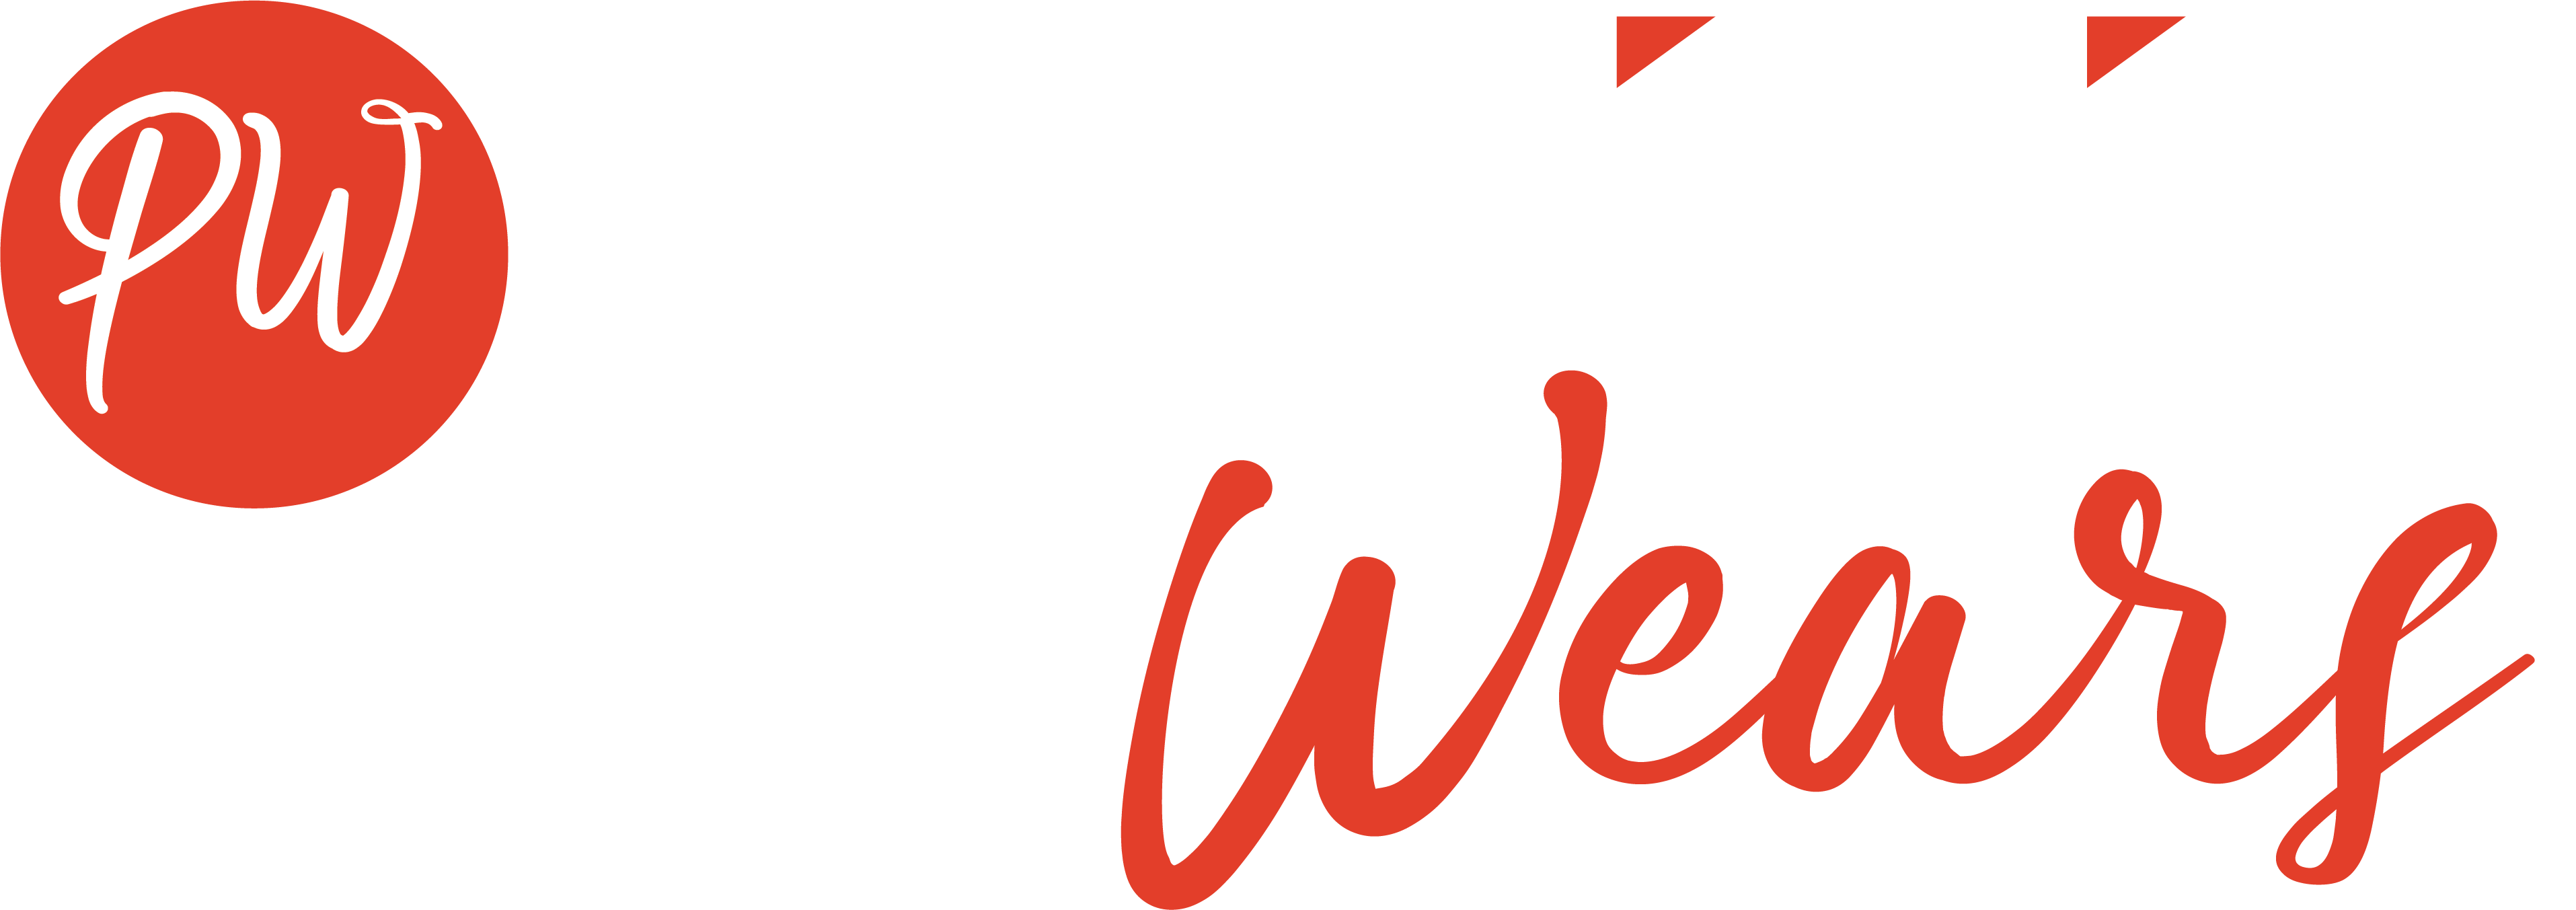 PaciWears Logo White ORg